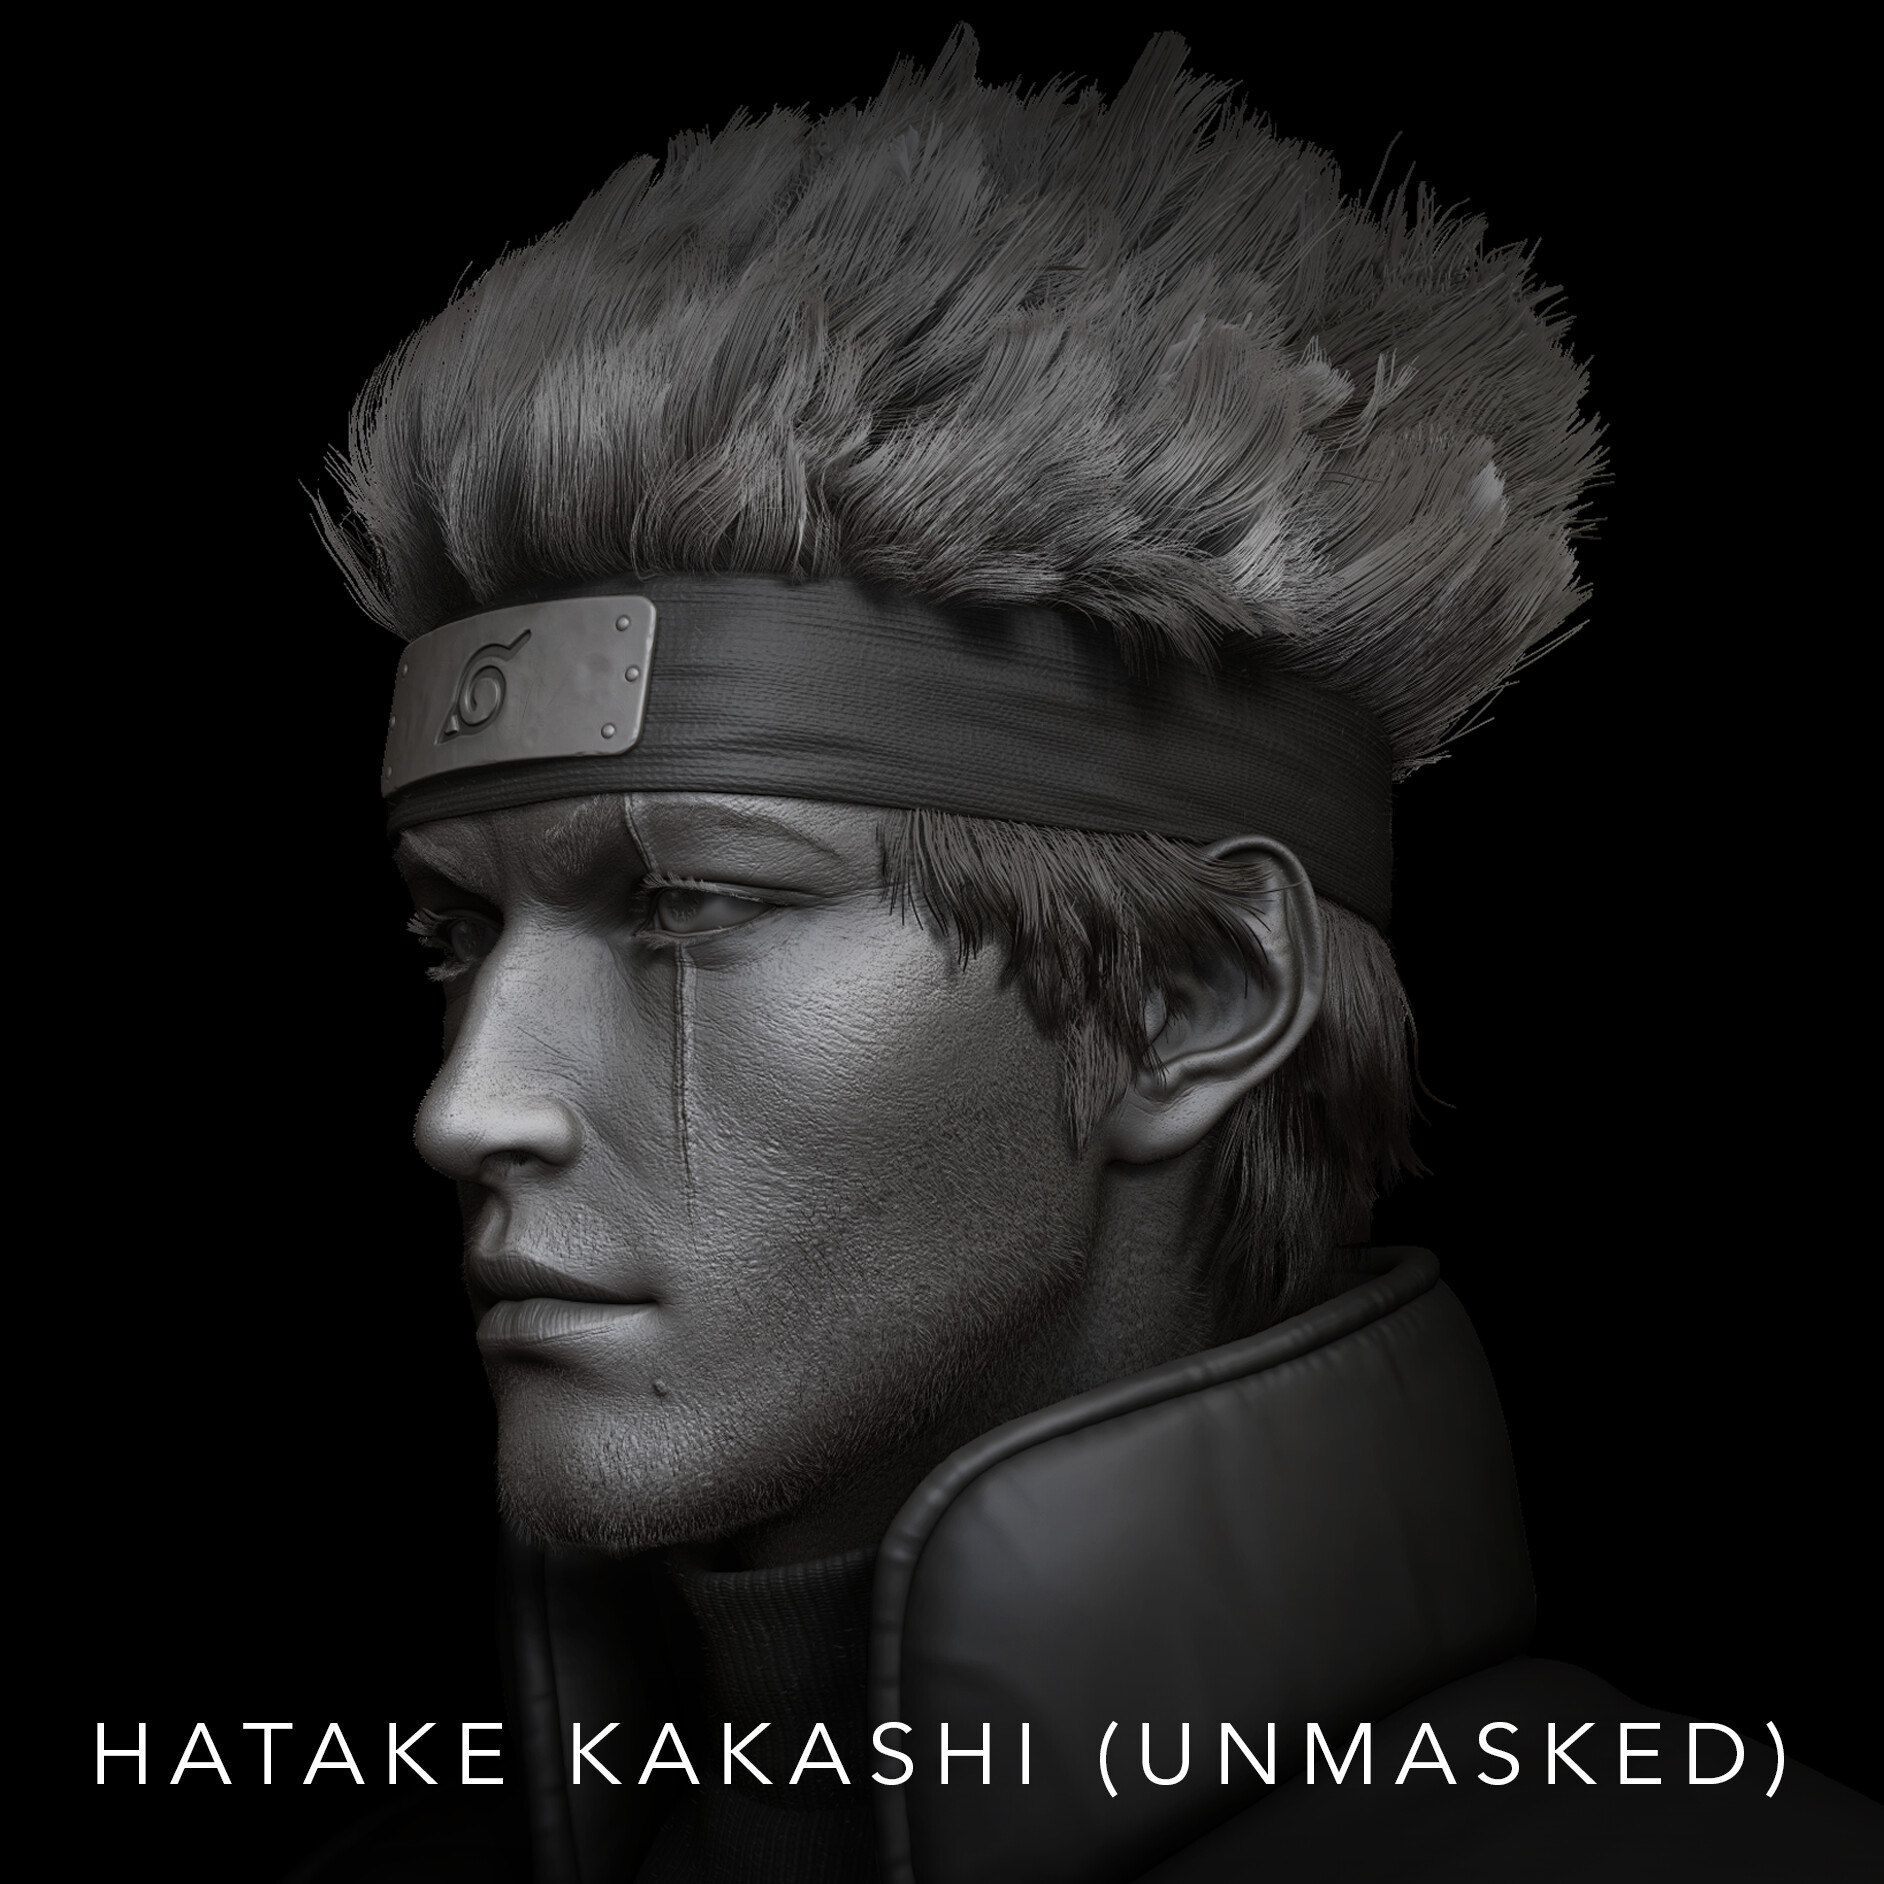 Kakashi (face reveal) by JazeArtInsta on DeviantArt